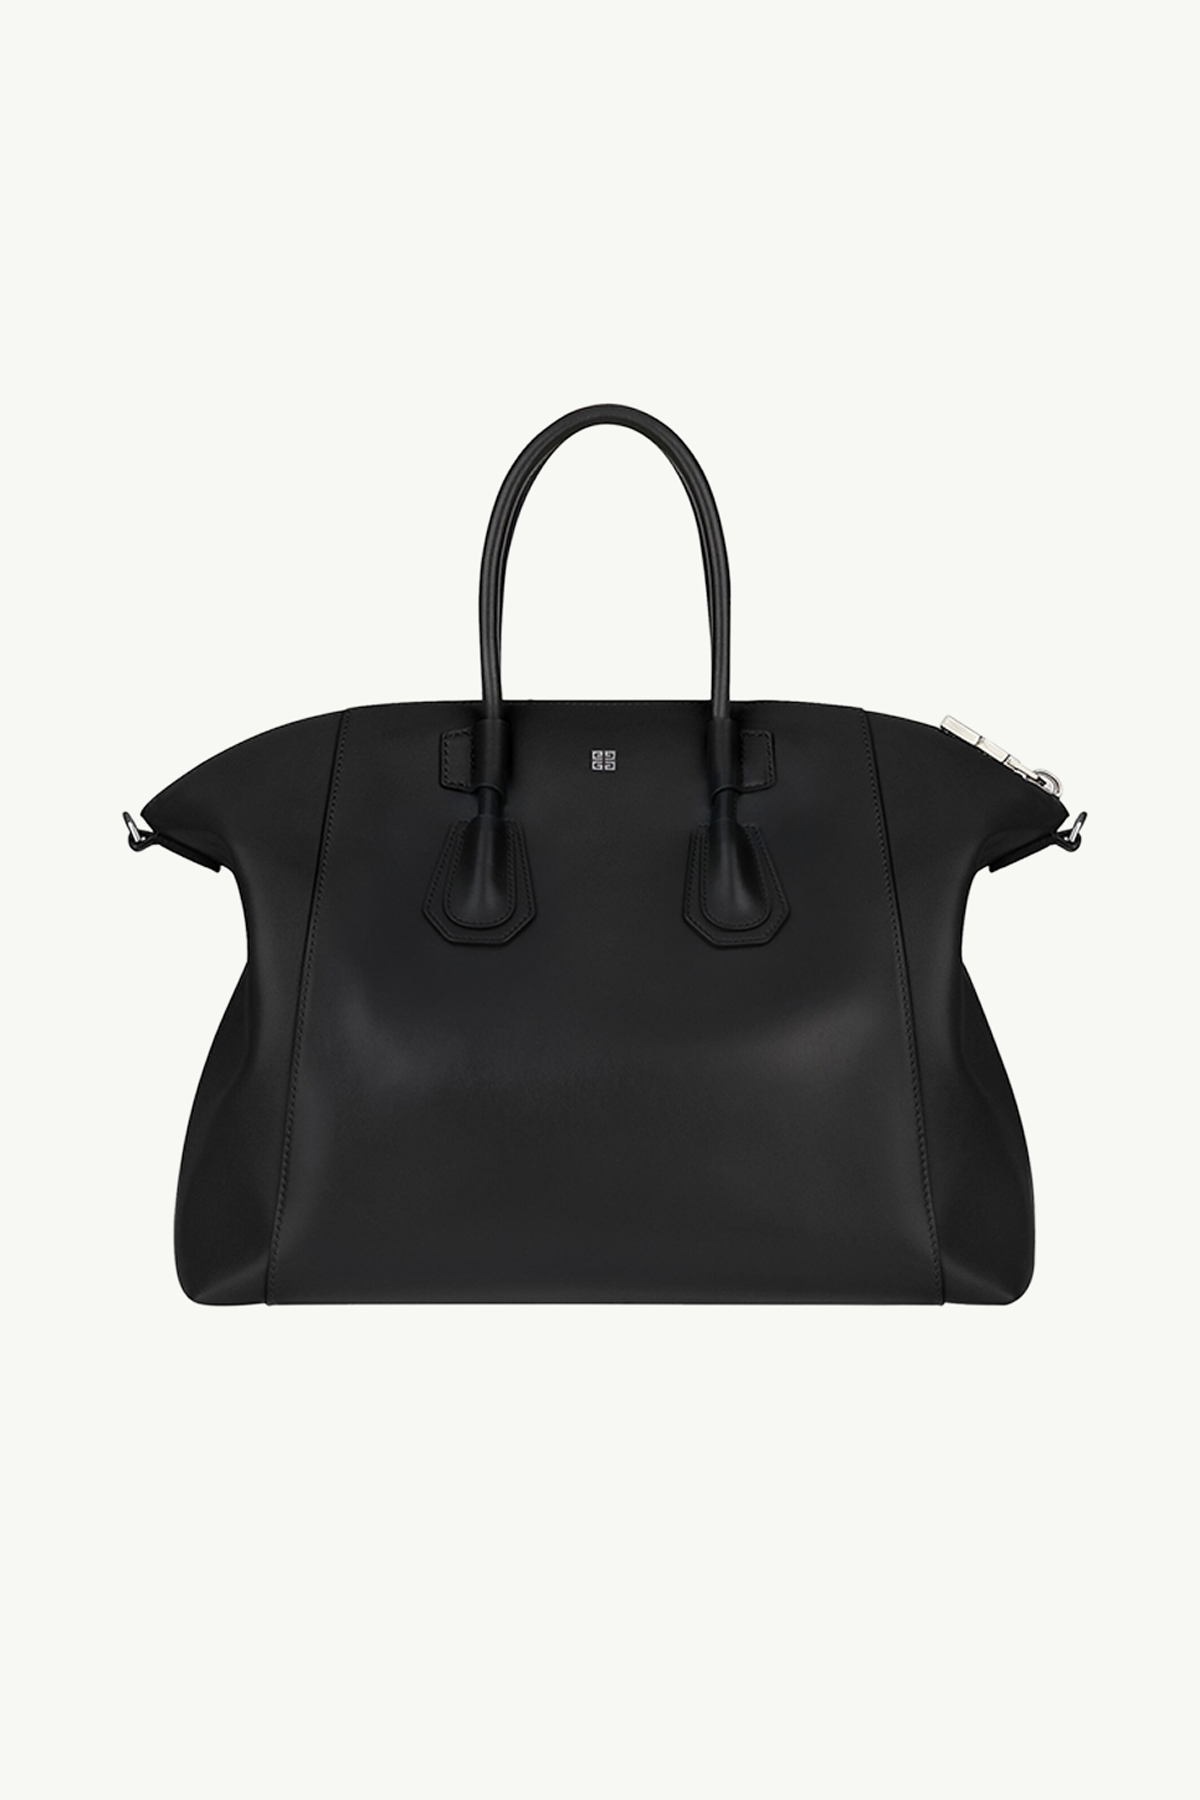 GIVENCHY Small Antigona Sport Bag in Black Smooth Leather 1